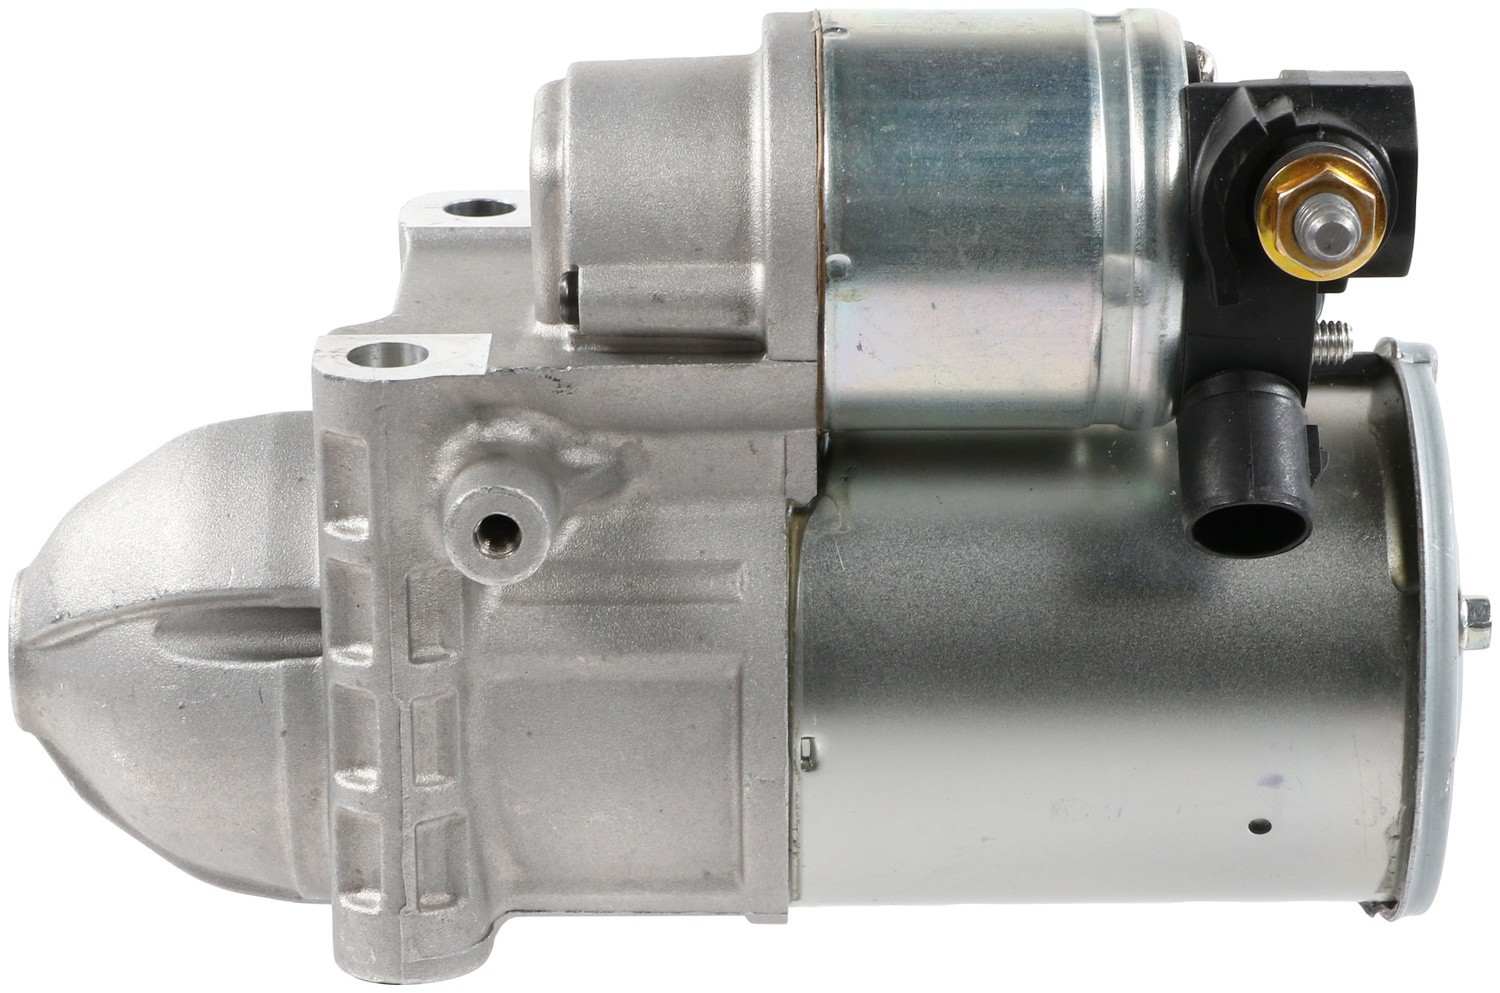 Bosch Starter Motor SR8673X